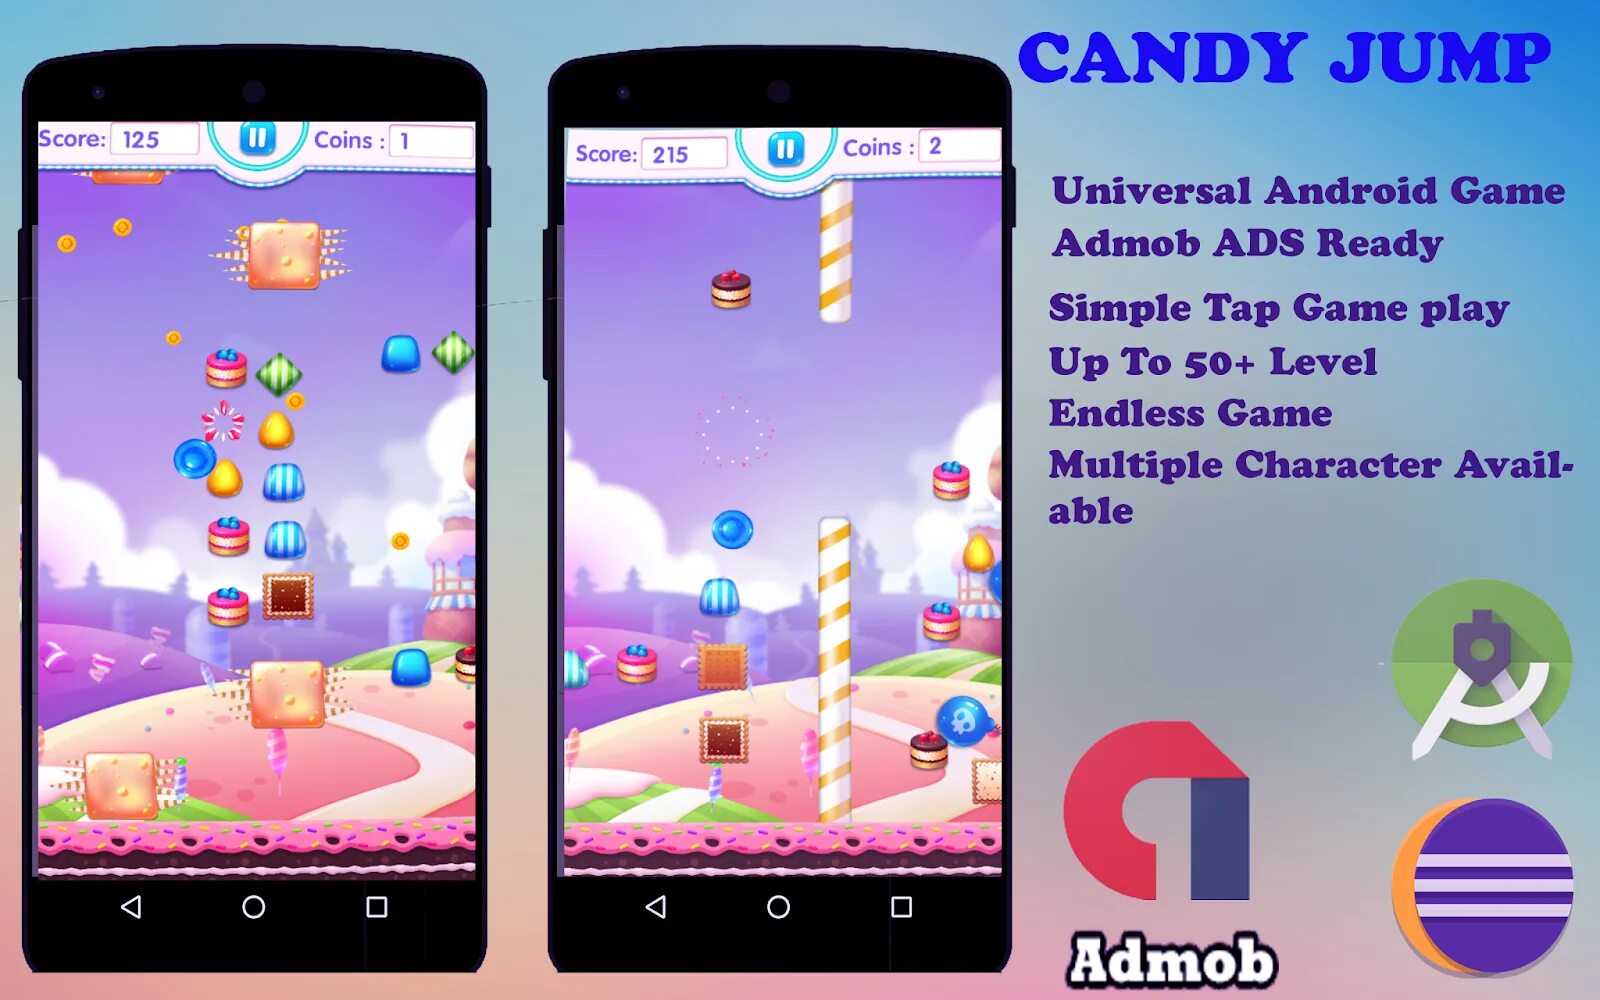 Android Studio игры. Примеры игр в андроид студио. Android Studio game activity. Студия игр Blue Android.